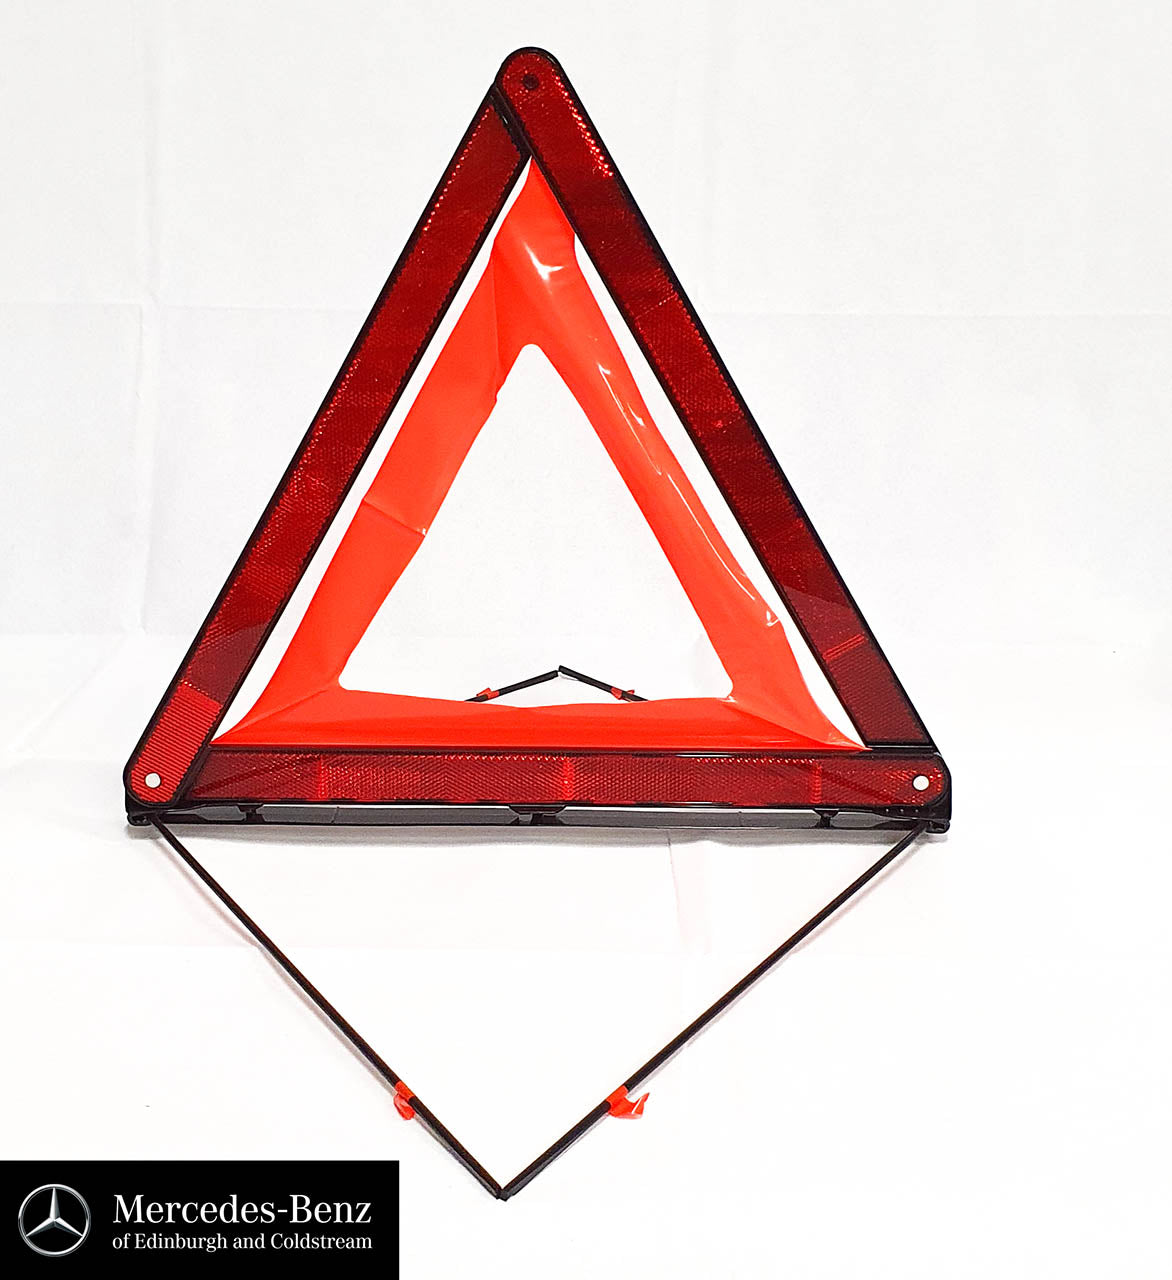 Genuine Mercedes-Benz warning triangle Reflector Safety Triangle car van